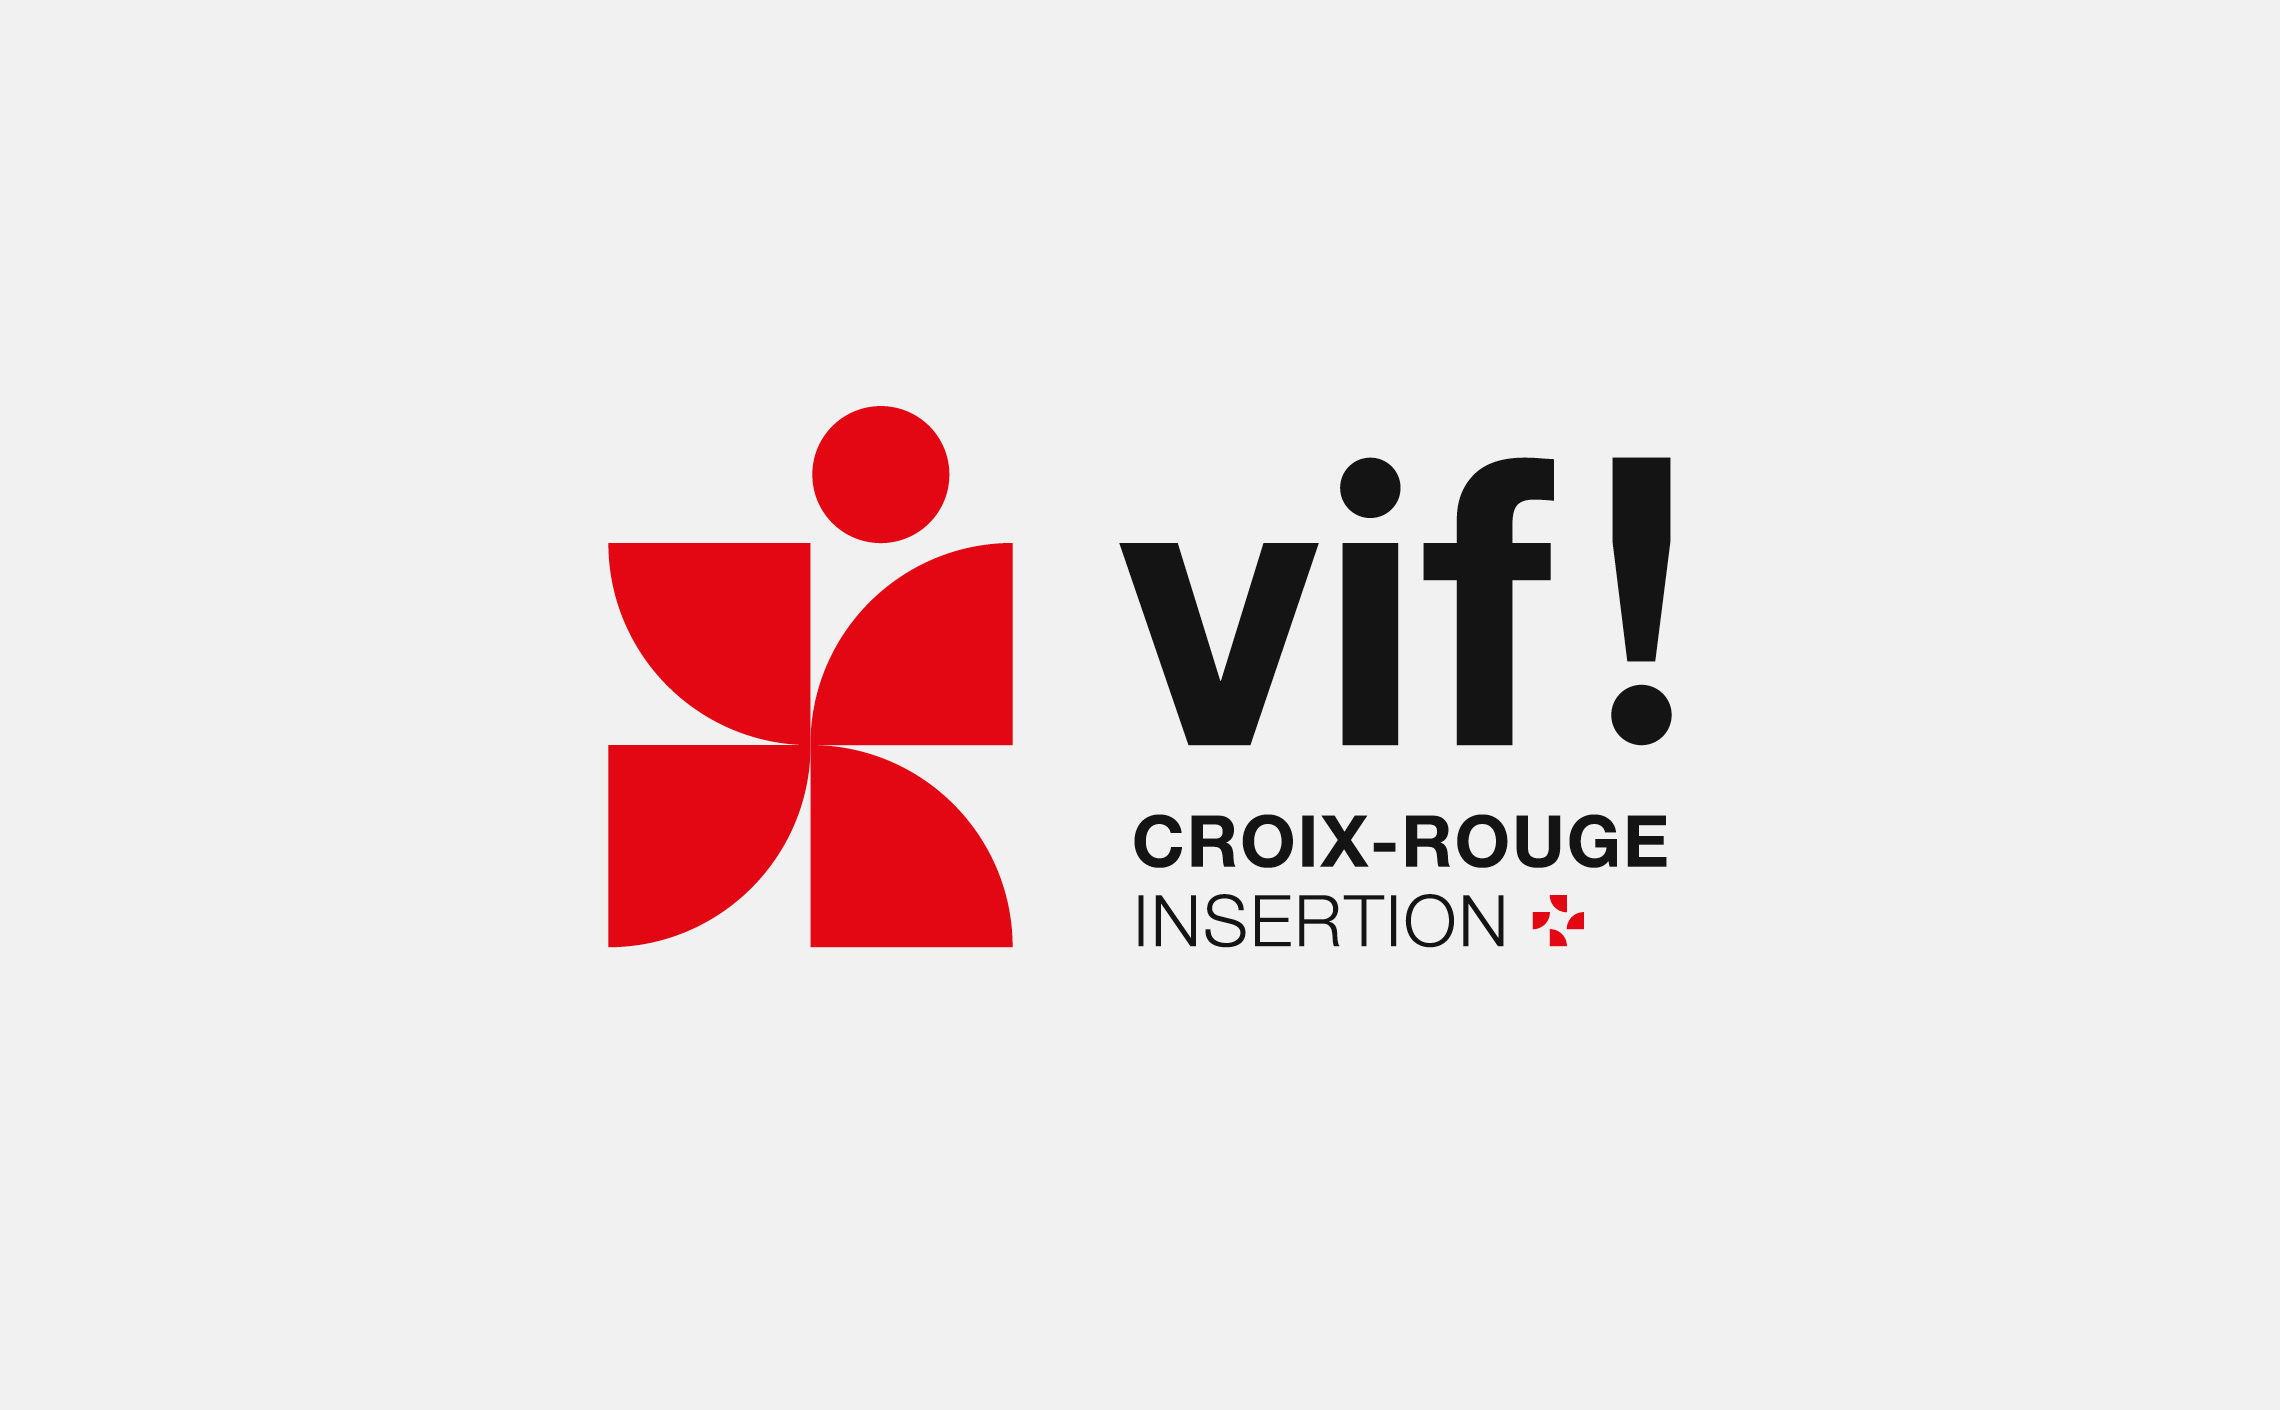 logo croix-rouge insertion vif design